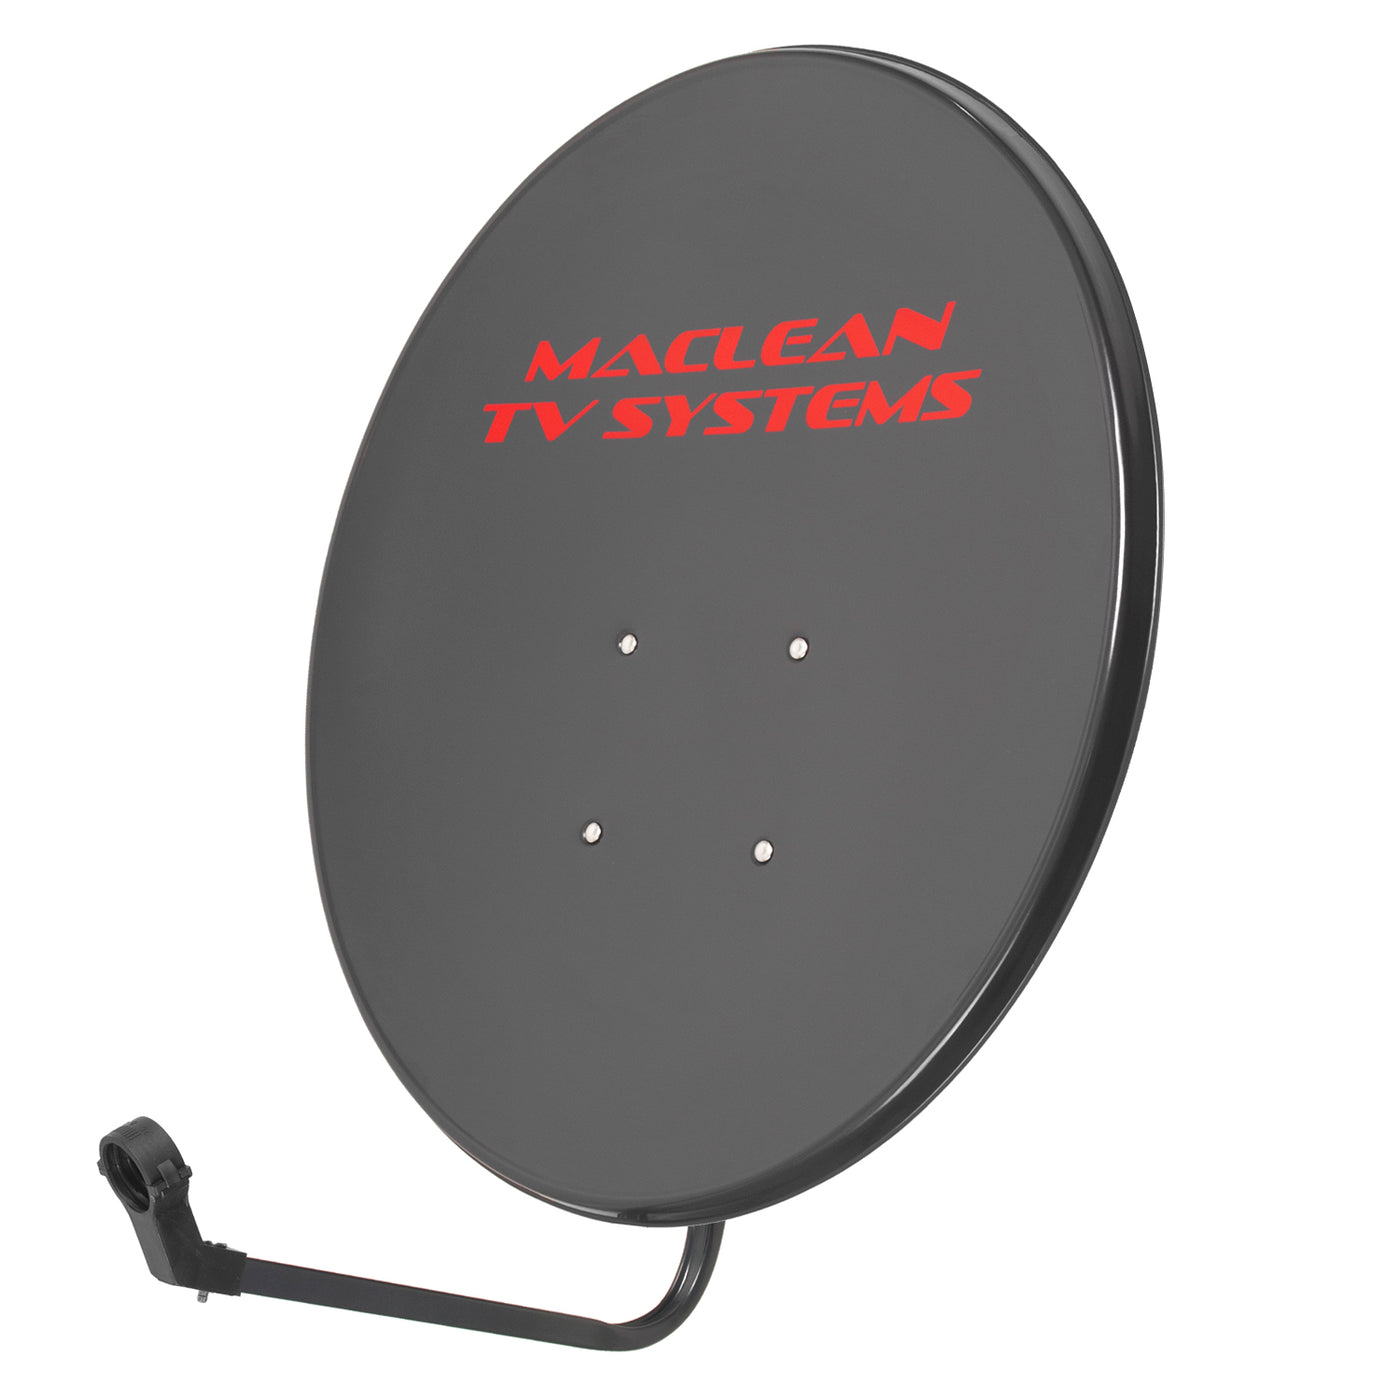 Antena satelitarna Maclean TV System, stal fosforowana, grafit, 80cm, MCTV-928